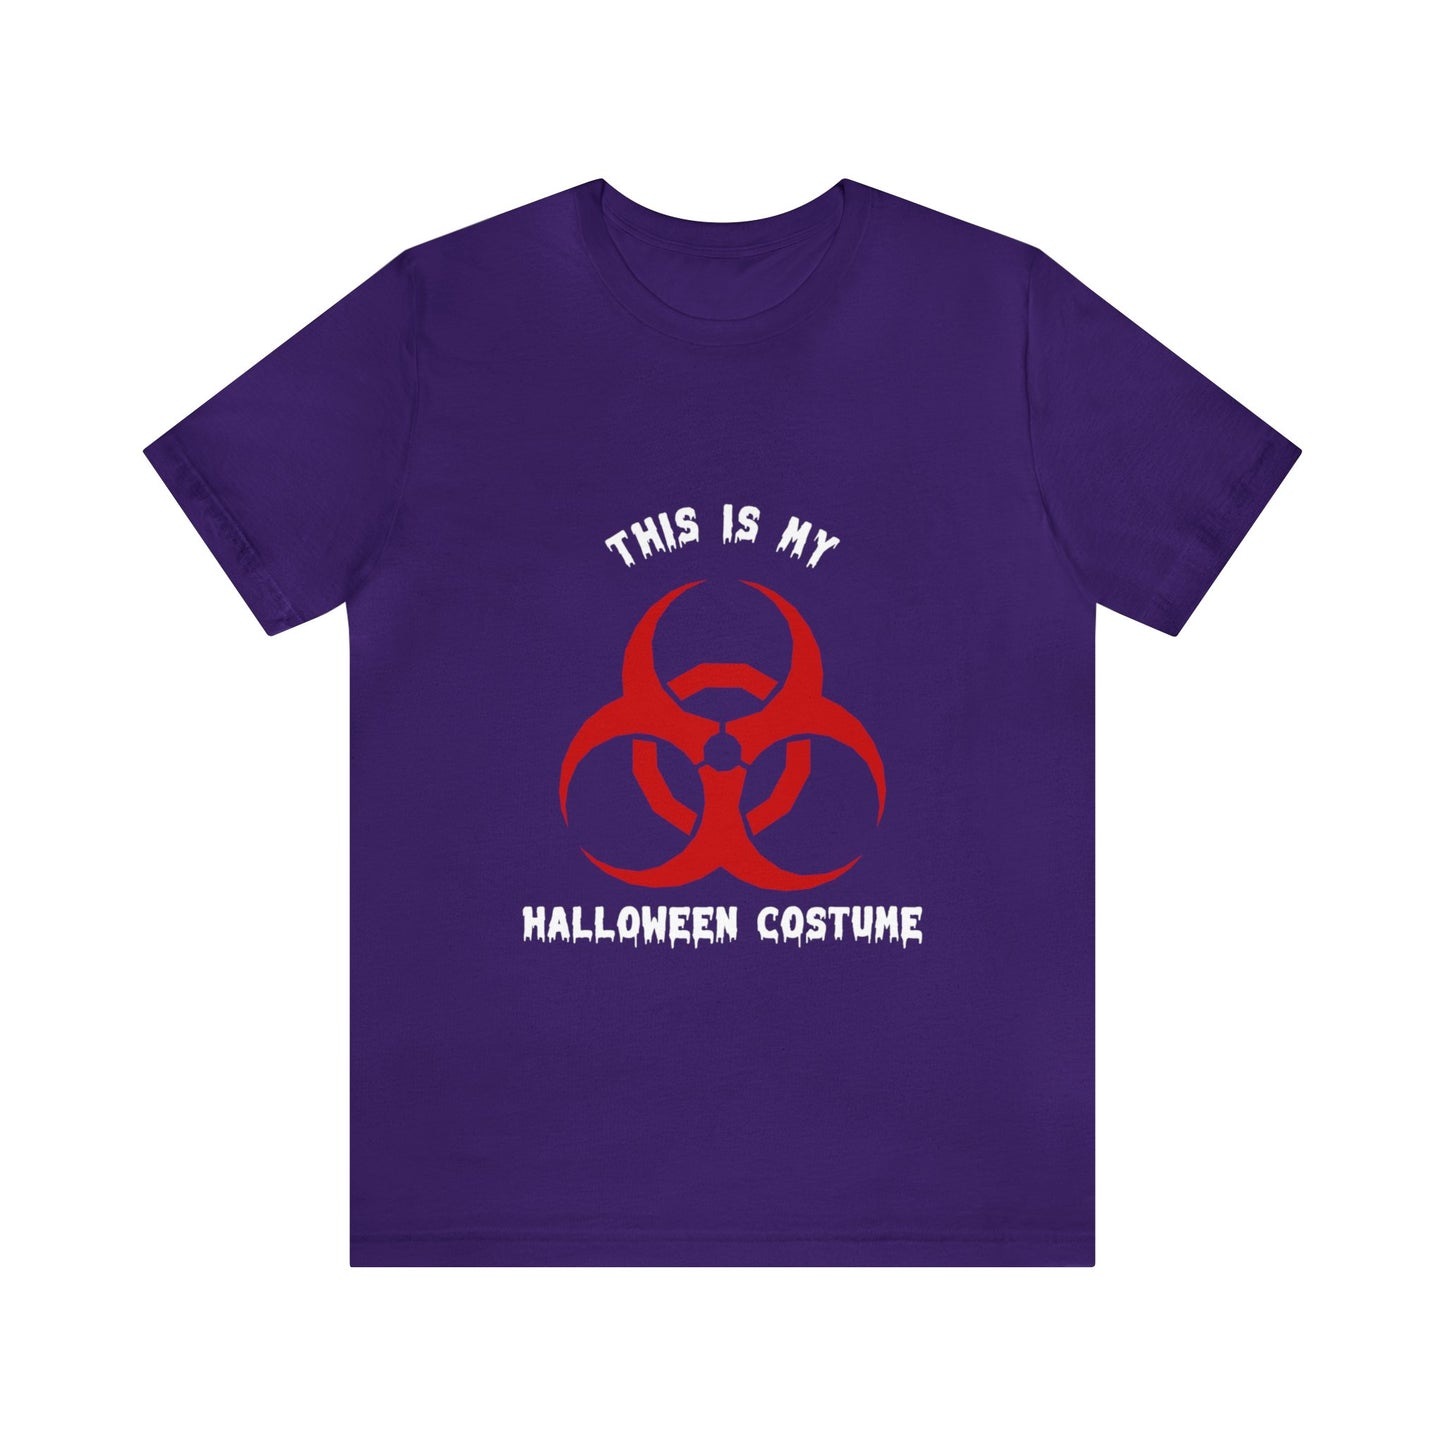 This Is My Halloween Costume - Unisex T-Shirt